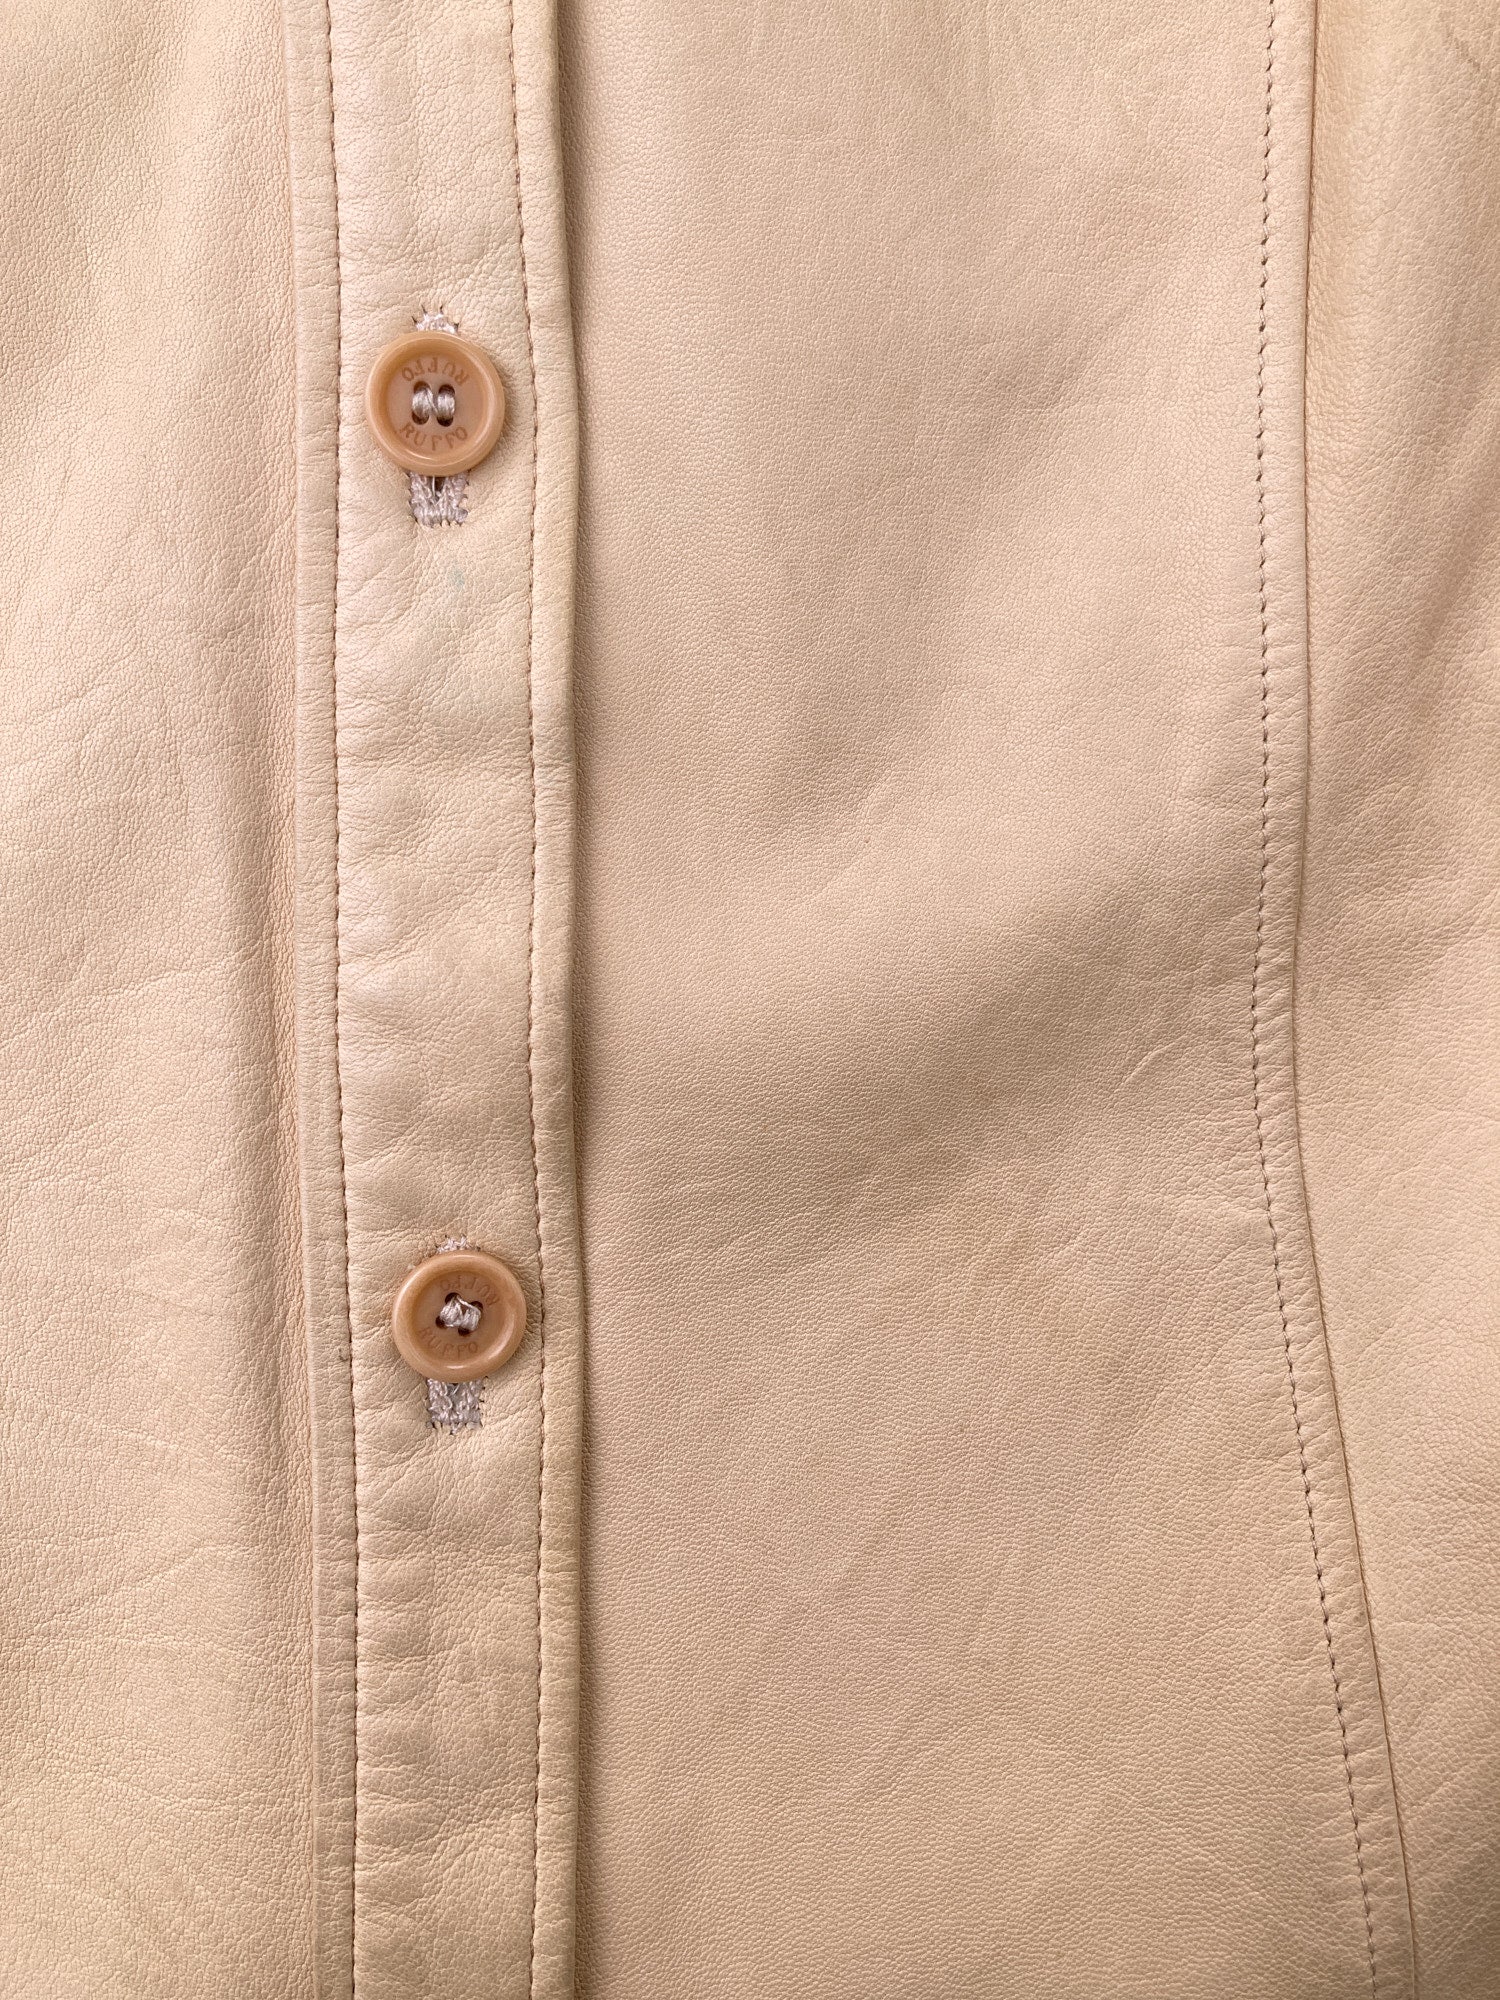 Ruffo beige leather shirt jacket - womens size 40